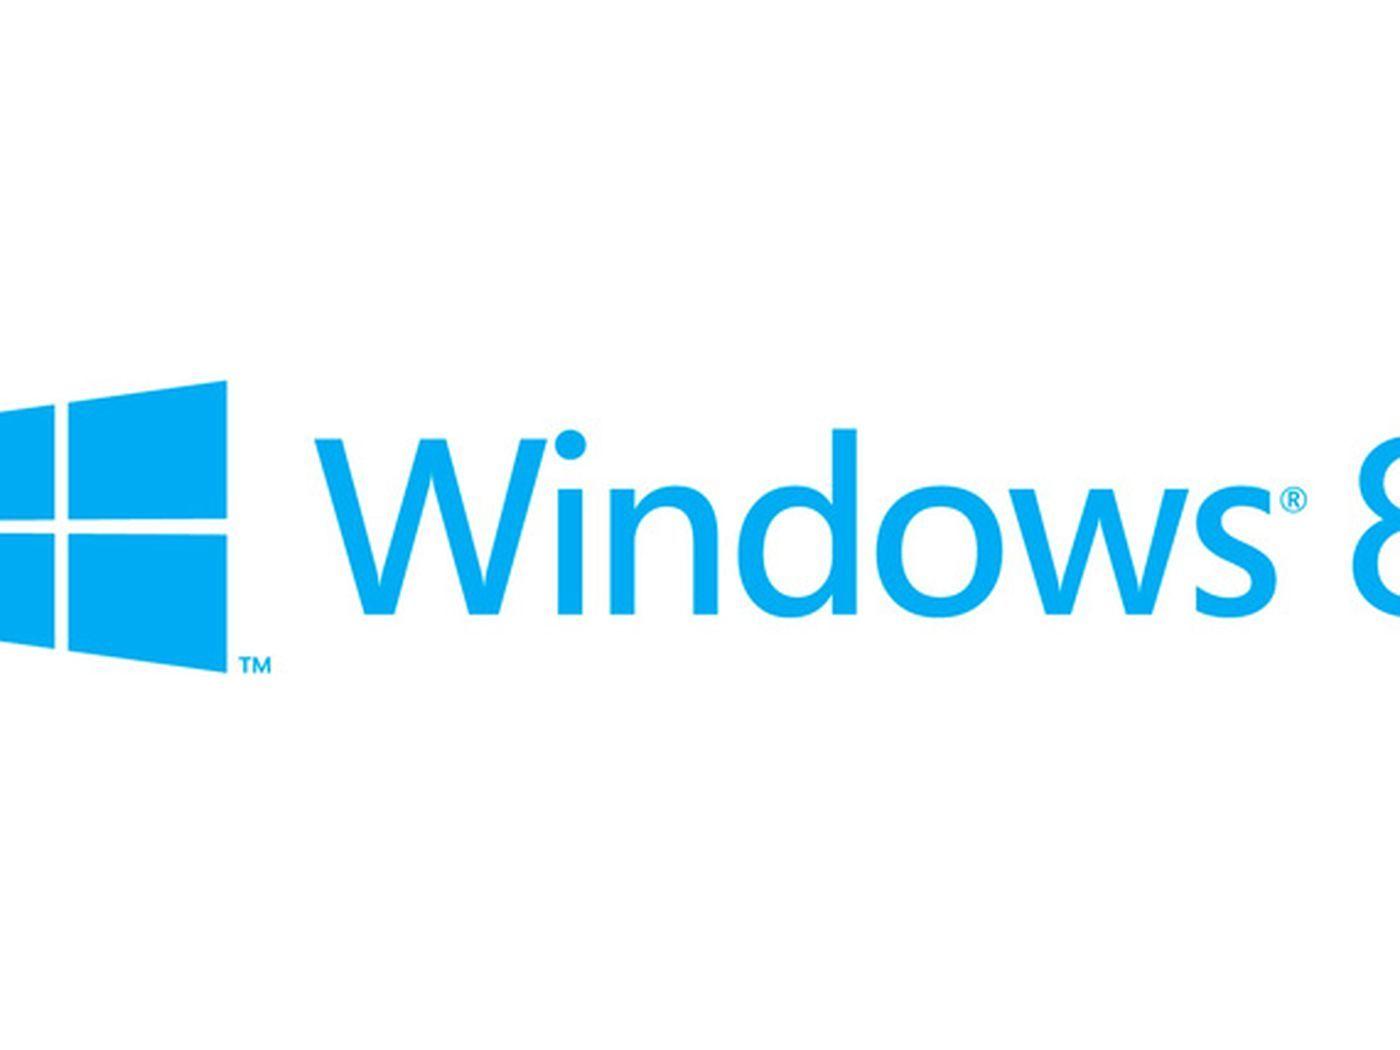 Windos Logo - Microsoft unveils new Metro style logo for Windows 8 - The Verge